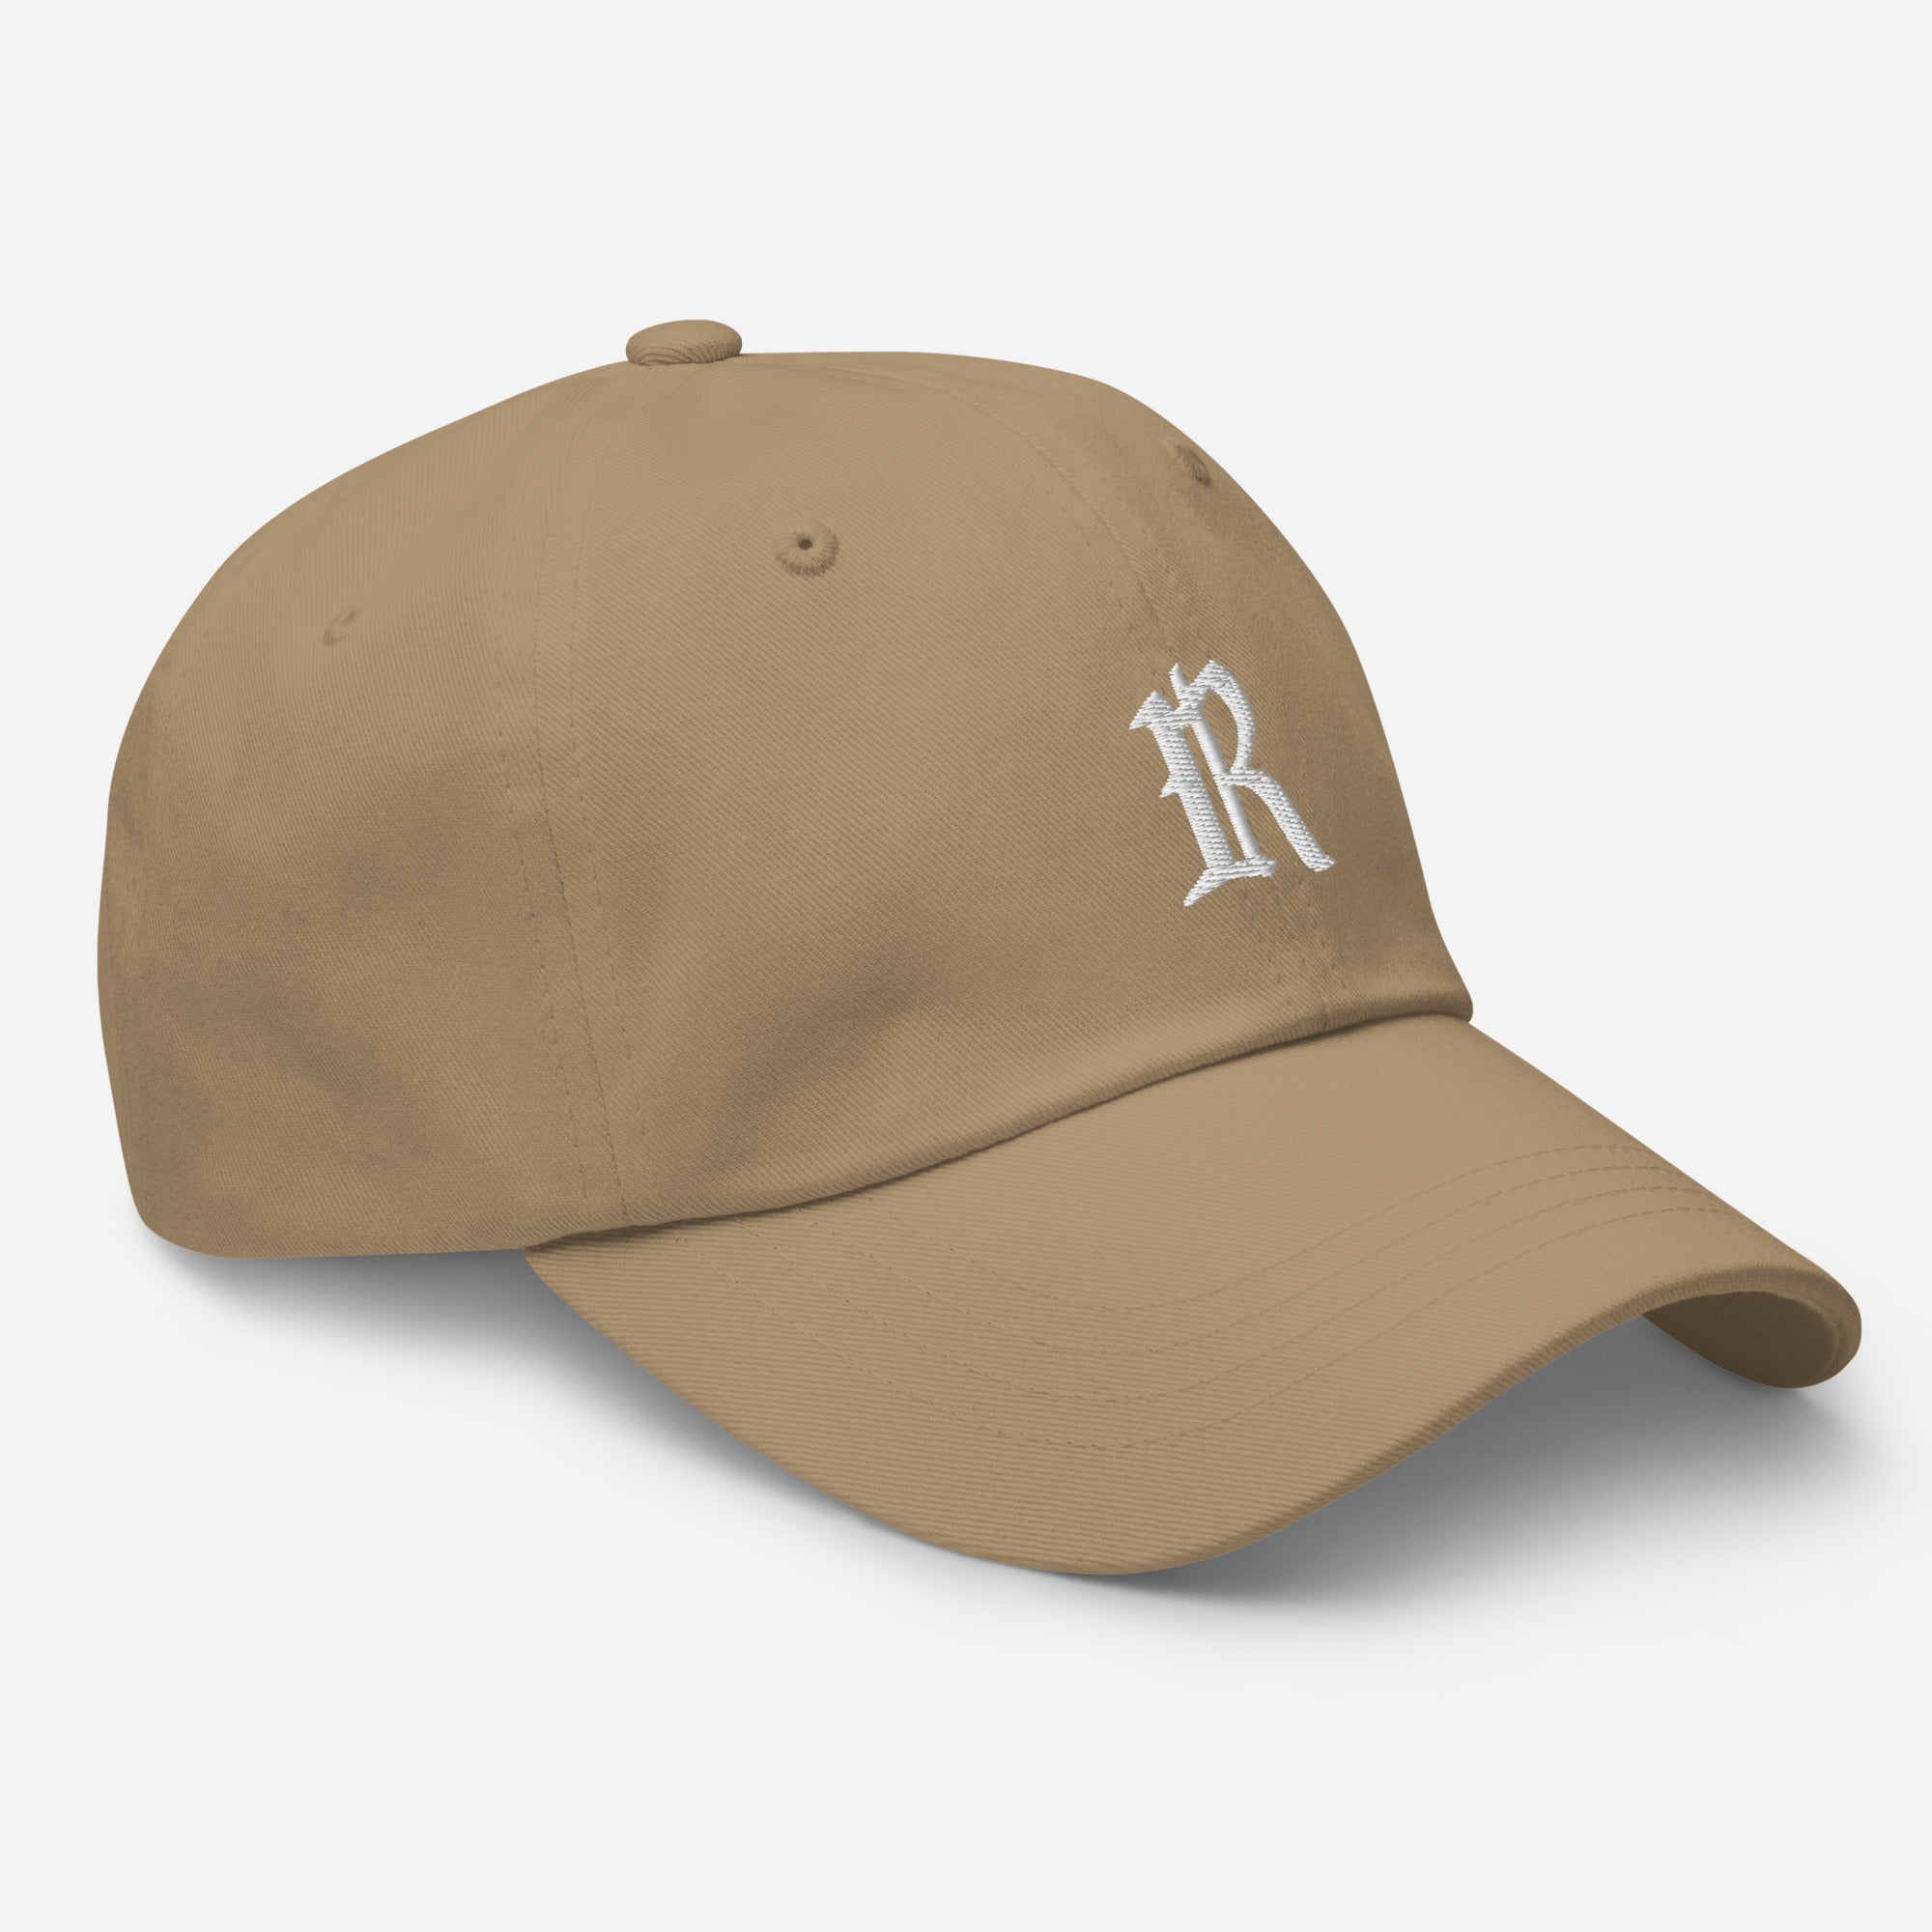 Reliance "R" Dad hat